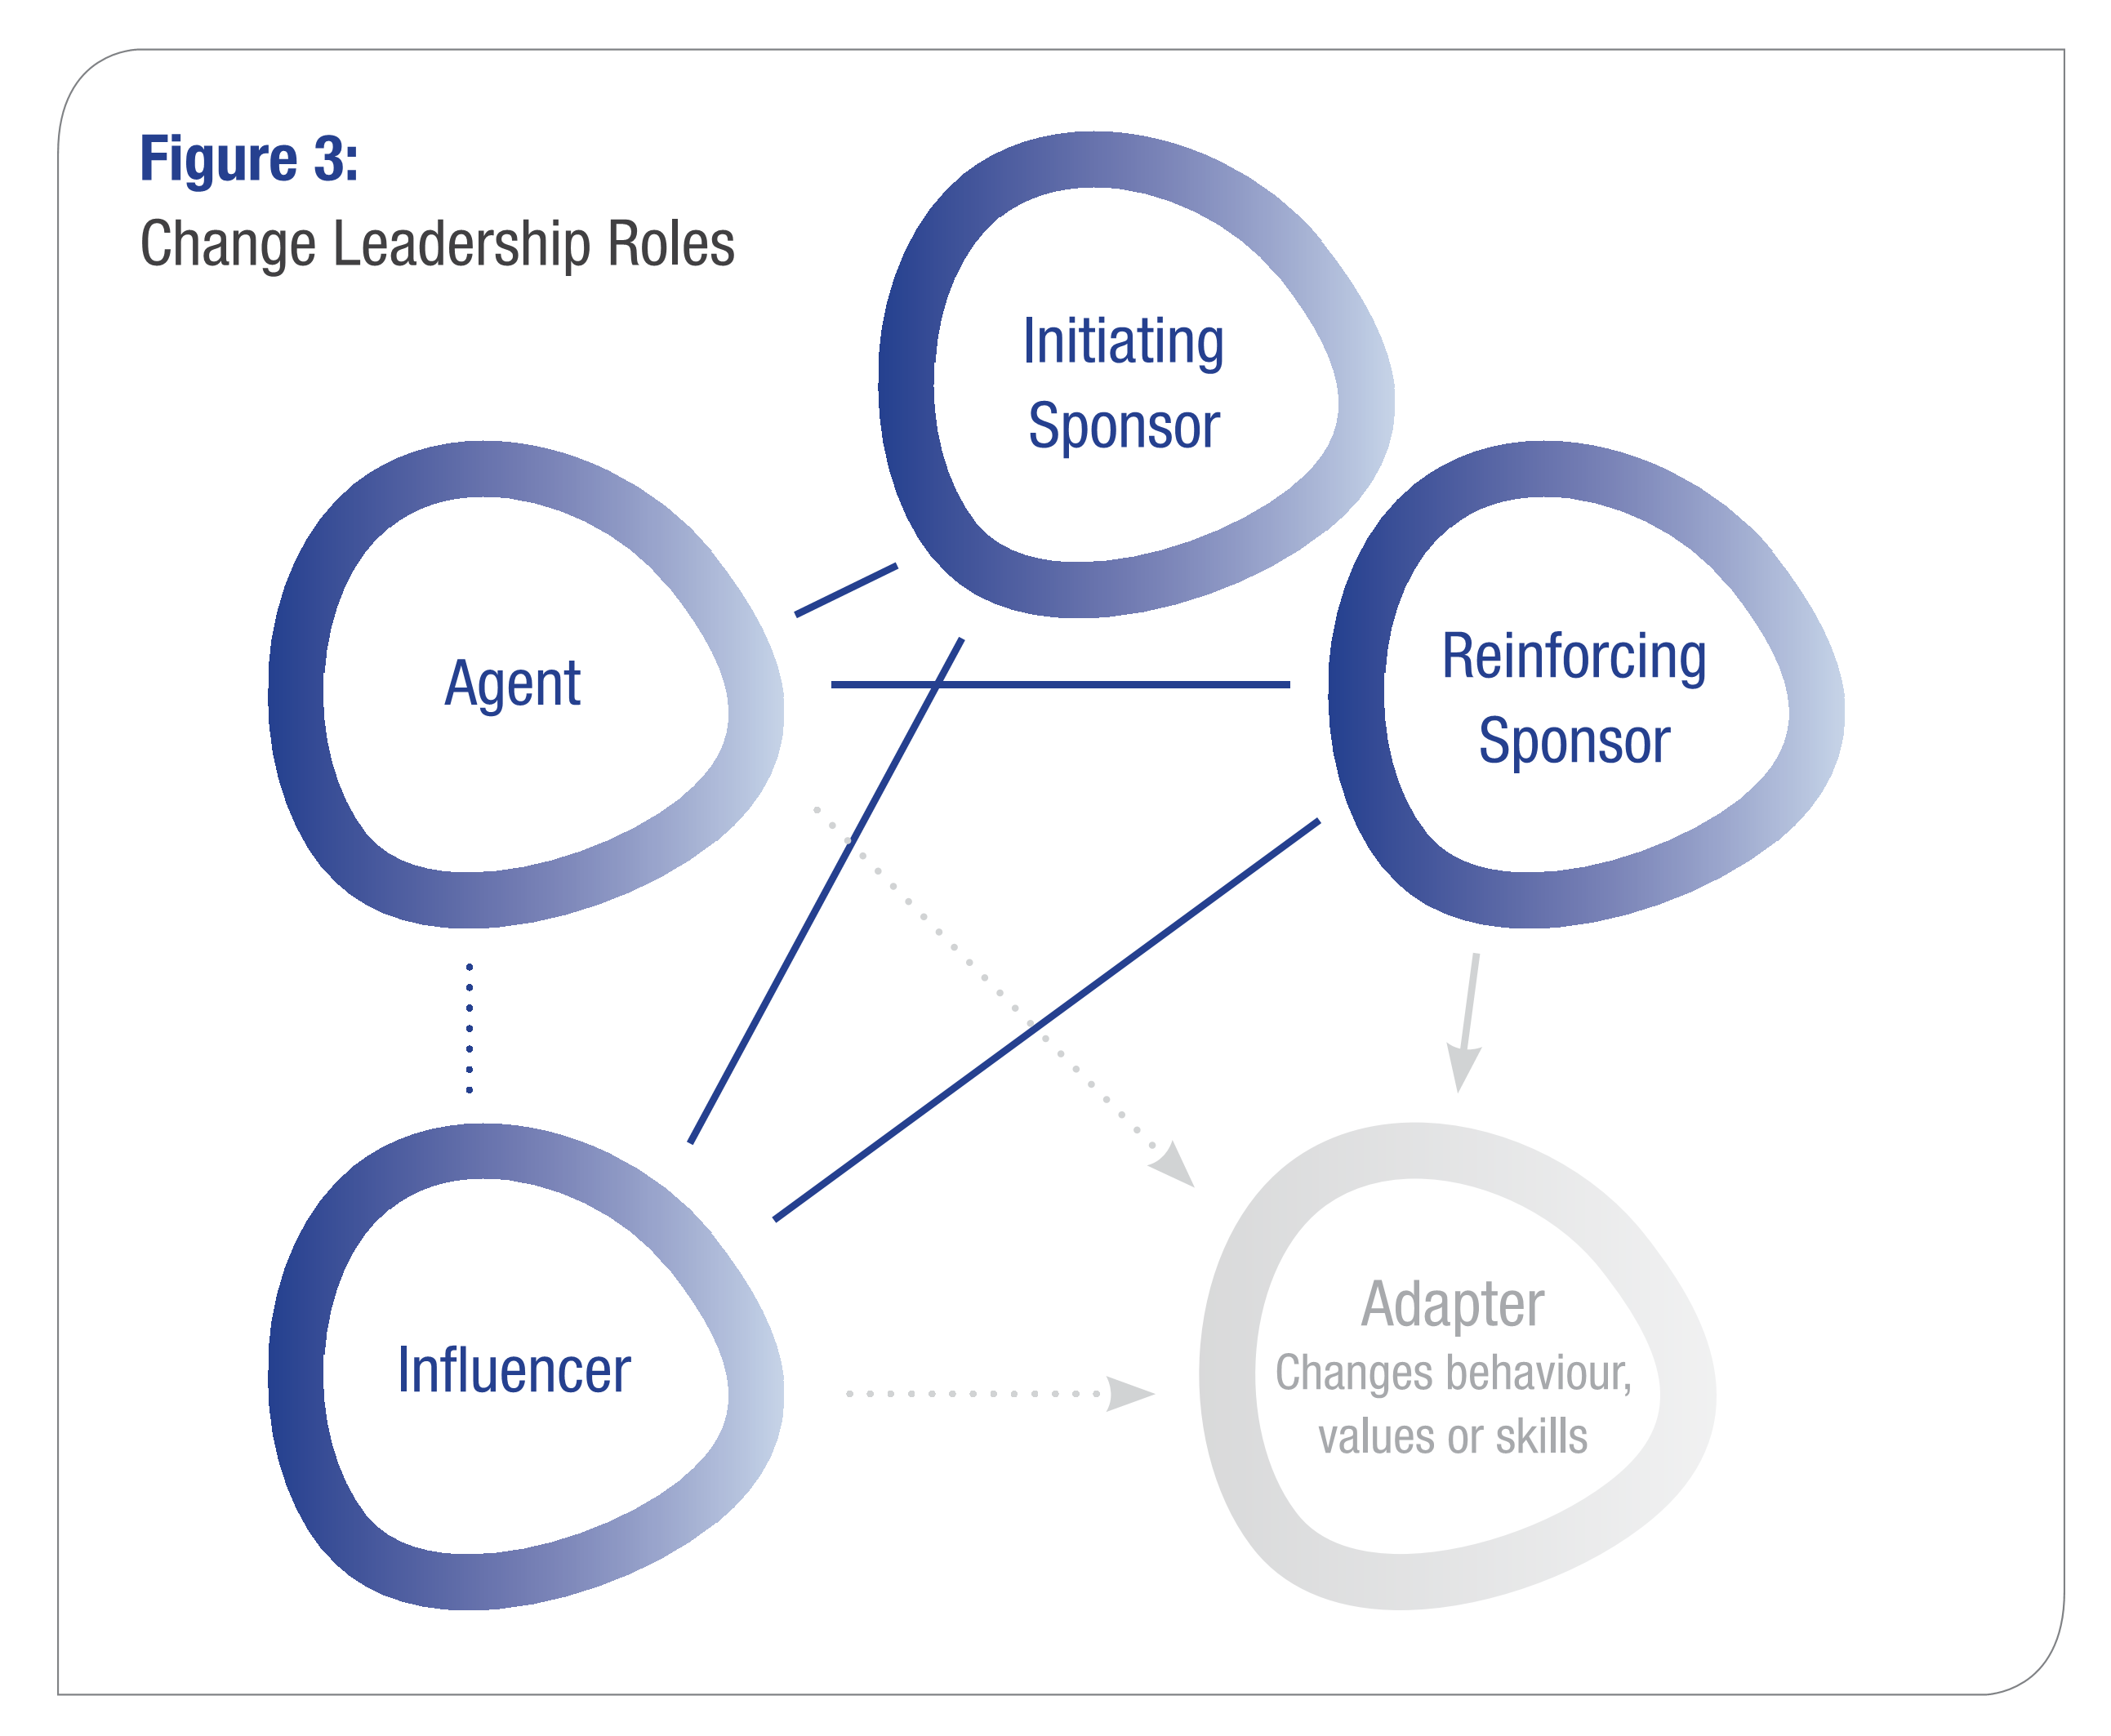 The Three Change Leadership Roles